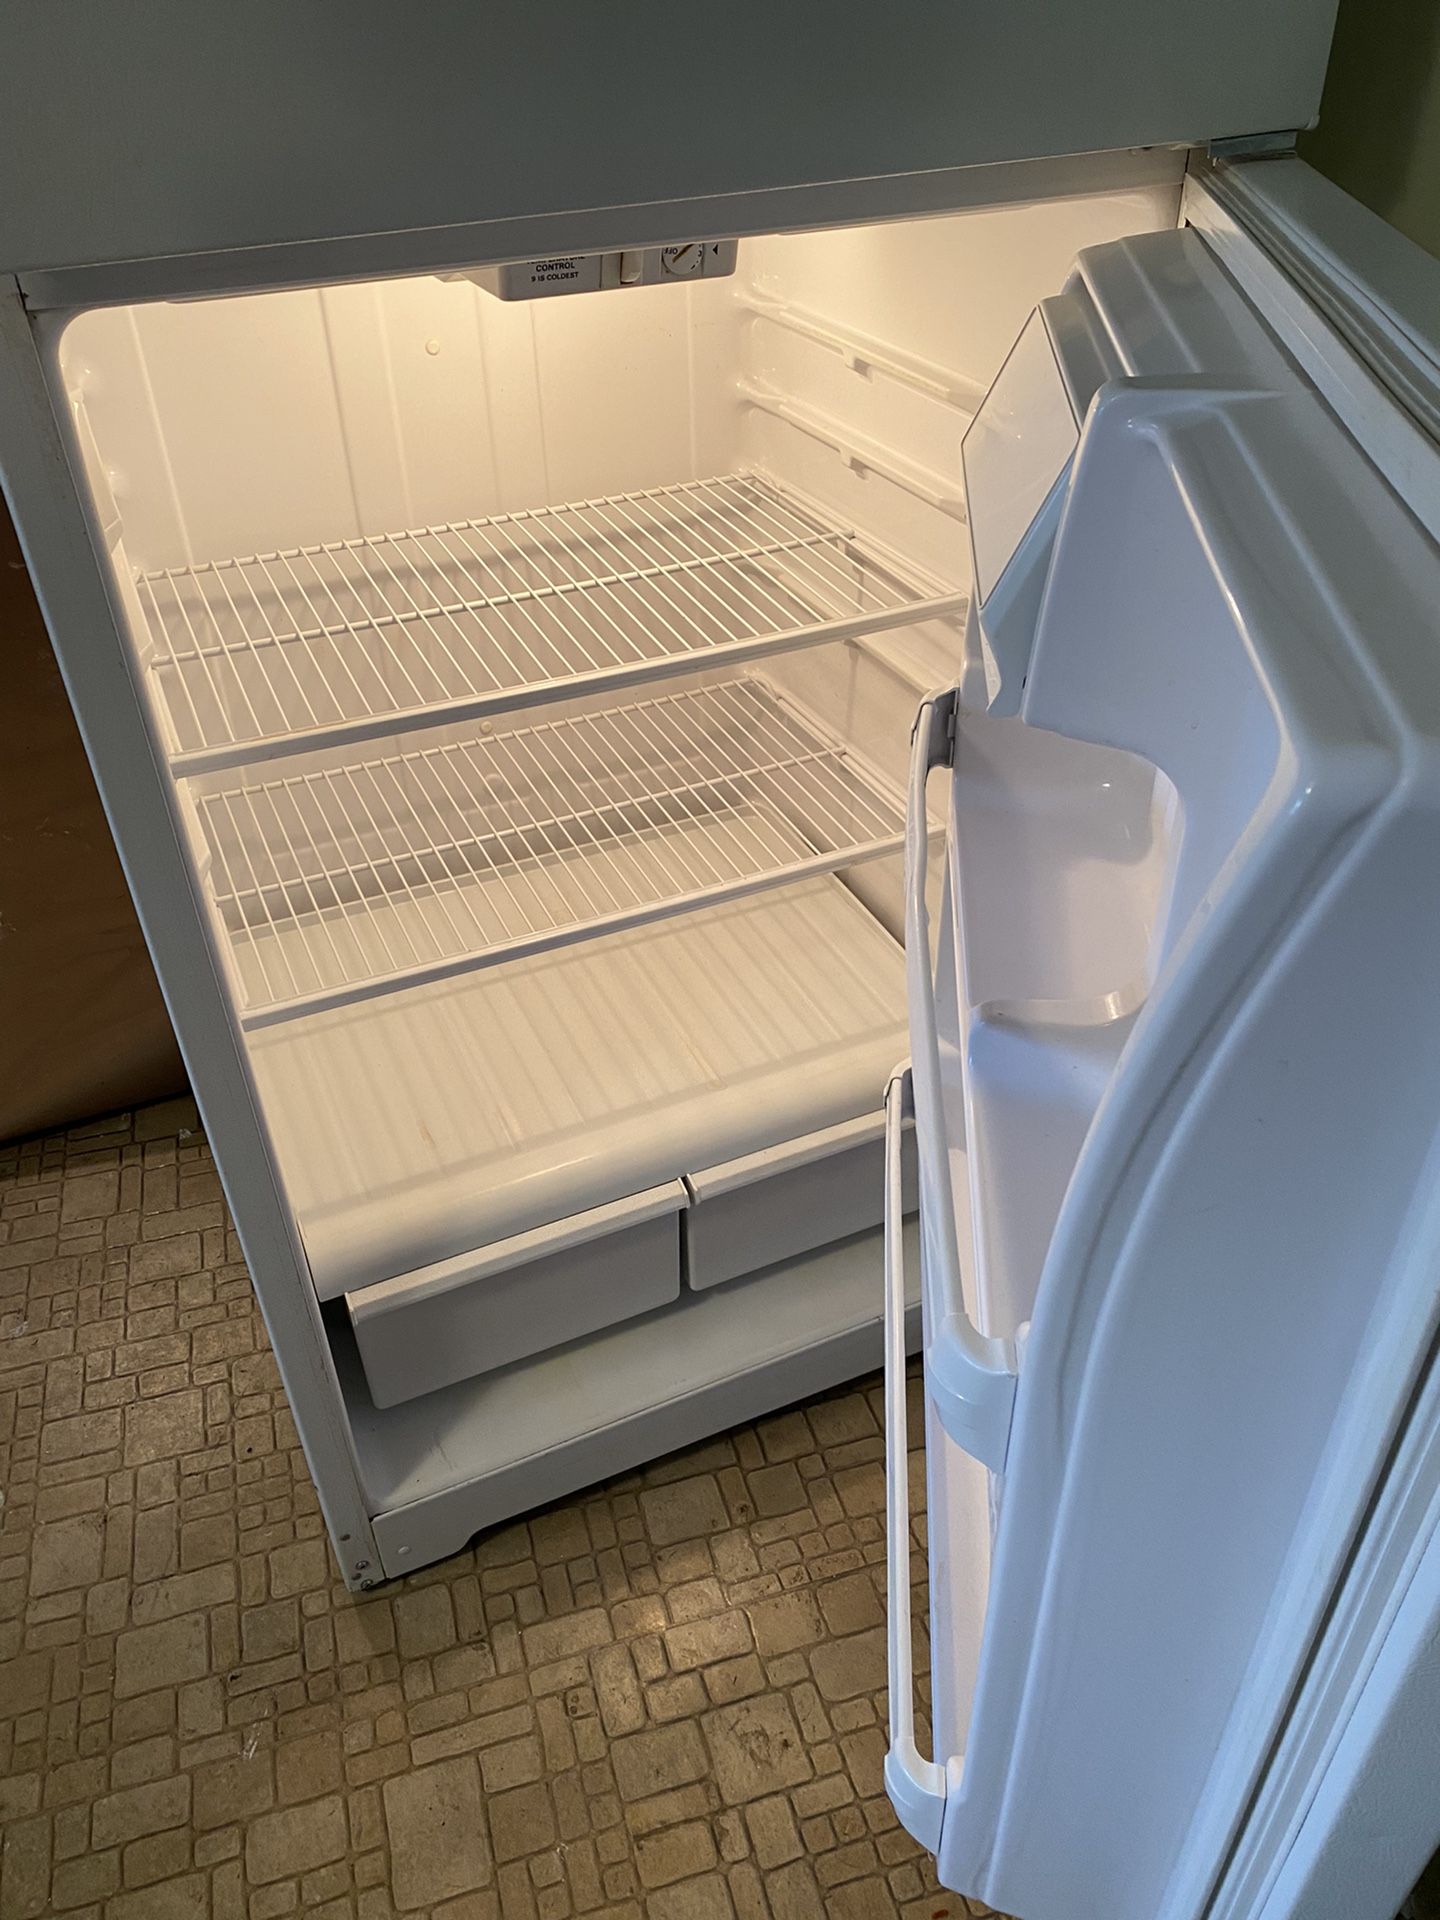 Refrigerator Good